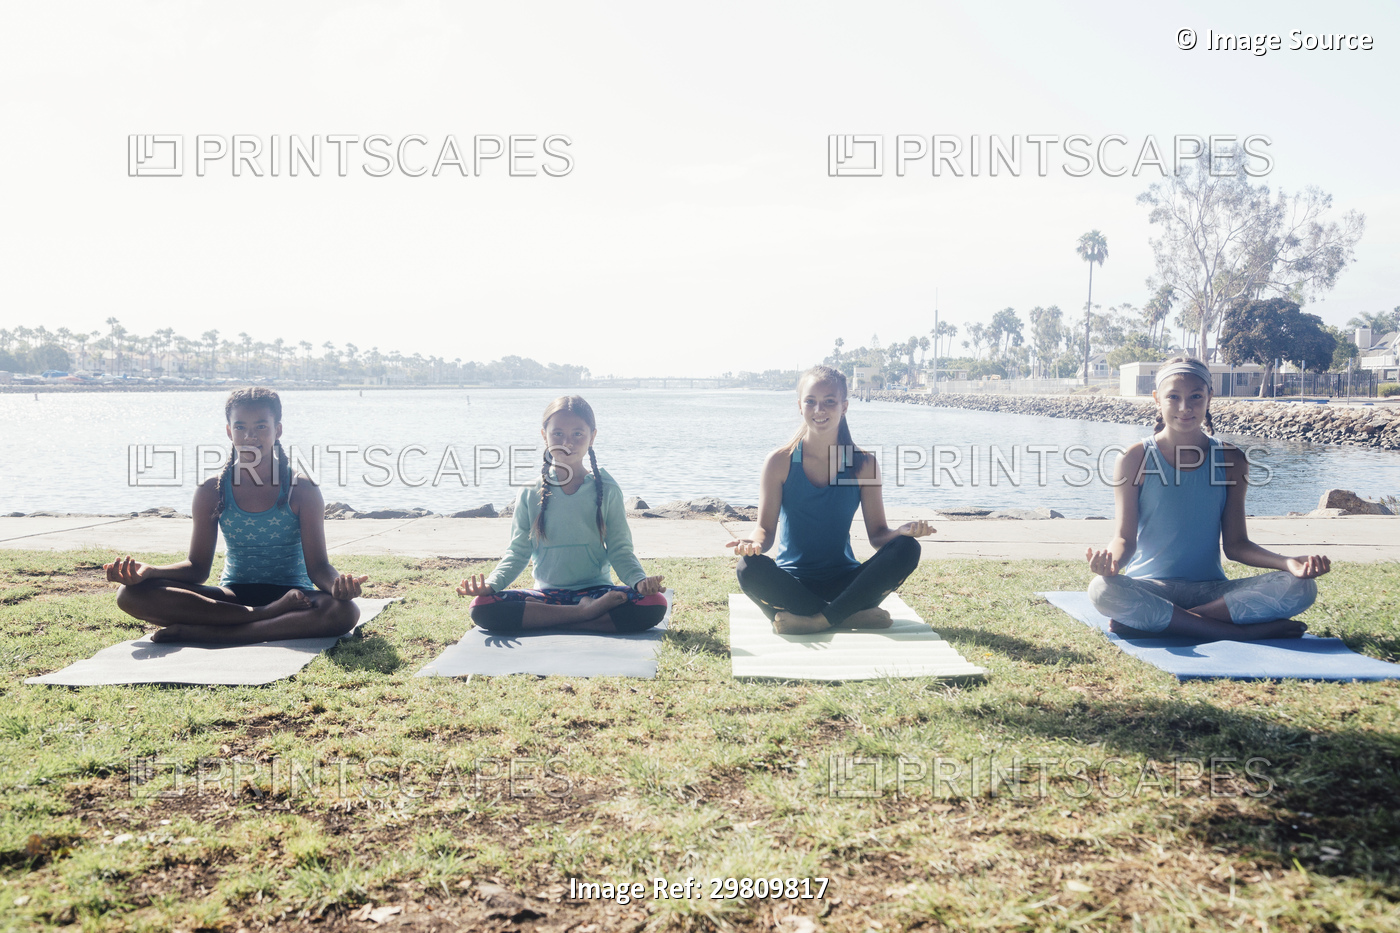 Schoolgirls practicing yoga lotus pose by lakeside on school sports field